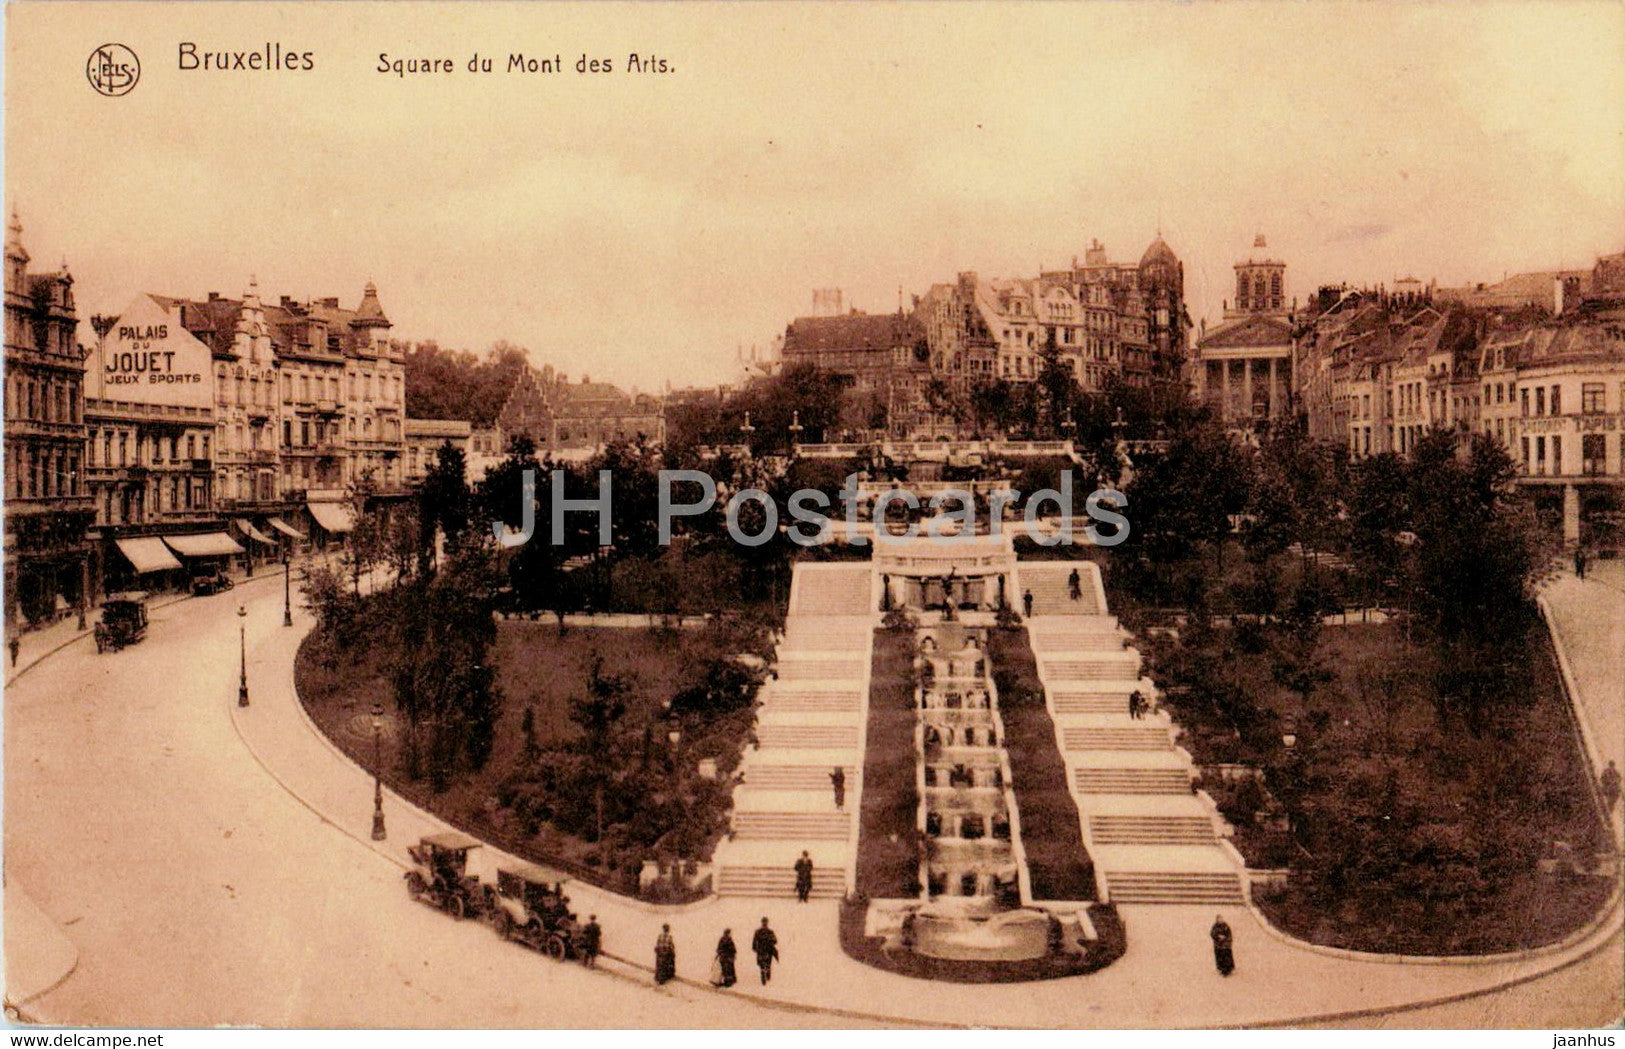 Bruxelles - Brussels - Square du Mont des Arts - 82 - old postcard - 1912 - Belgium - used - JH Postcards